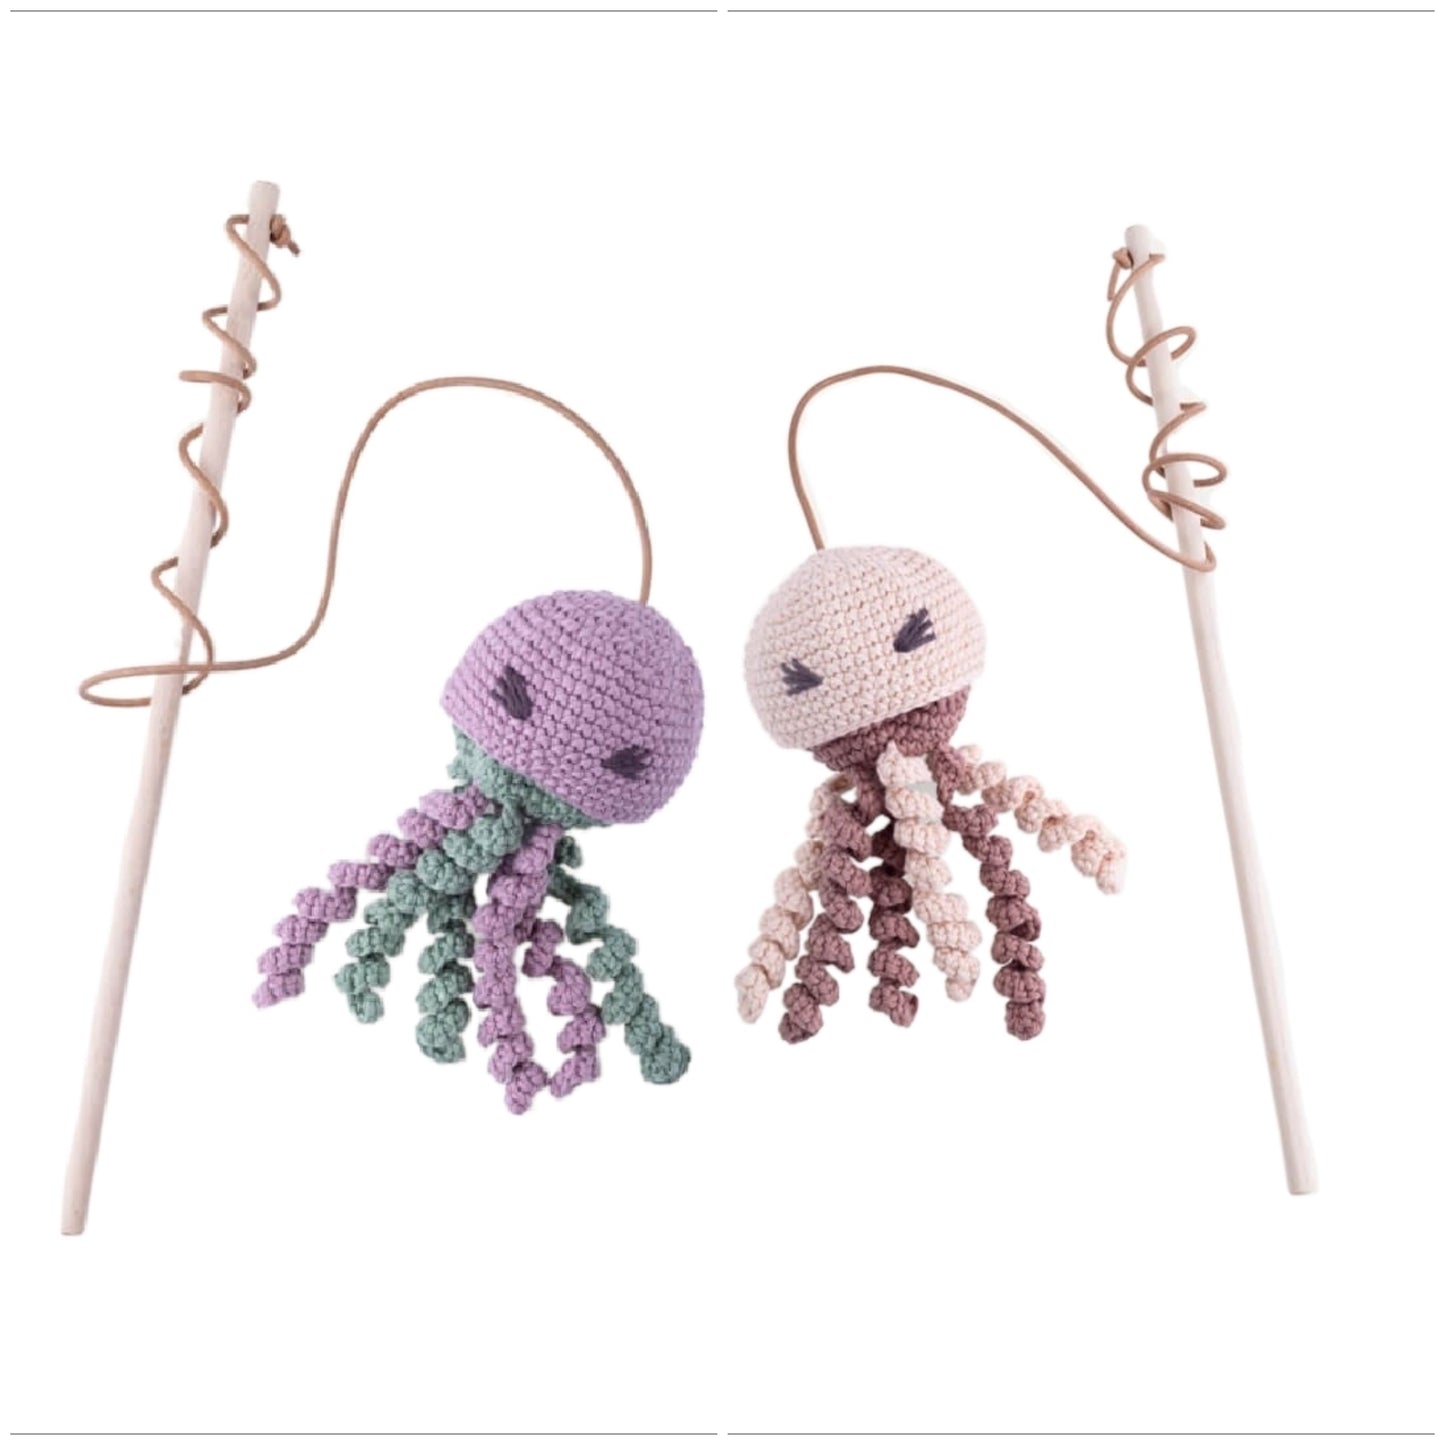 Jellyfish Wand Toy